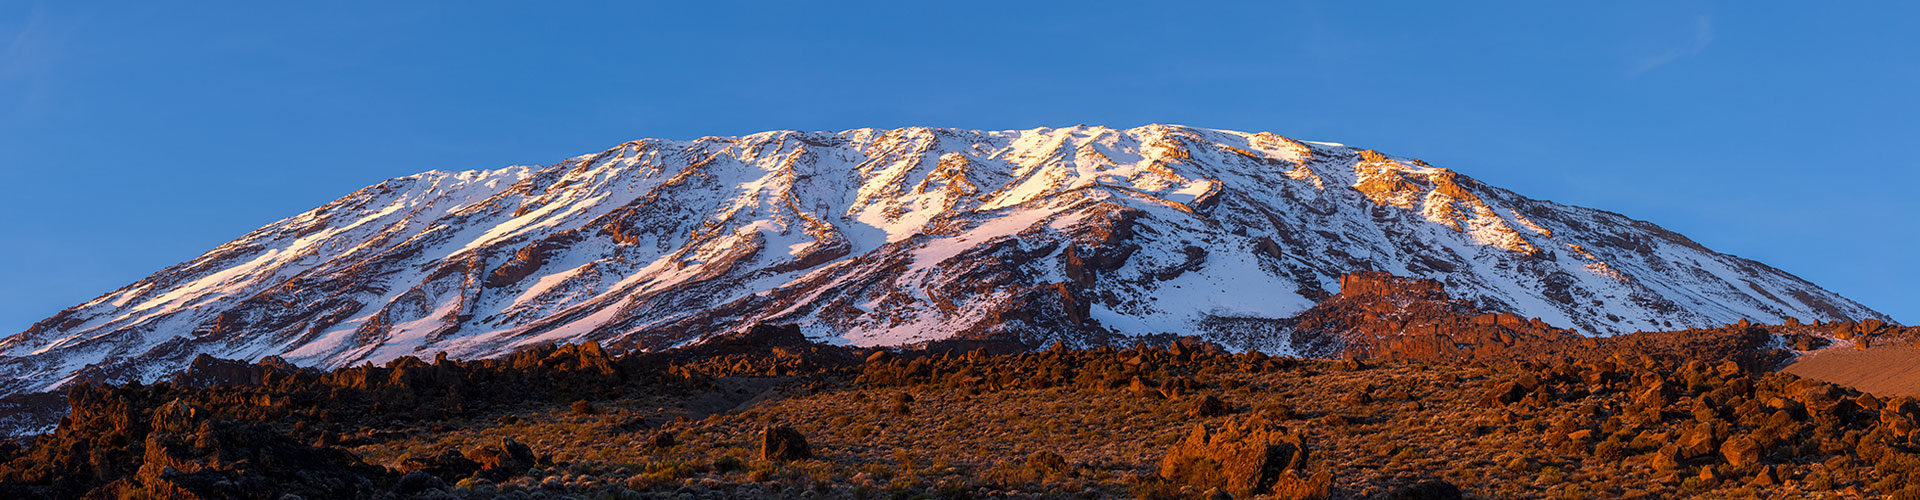 snowy kilimanjaro peak